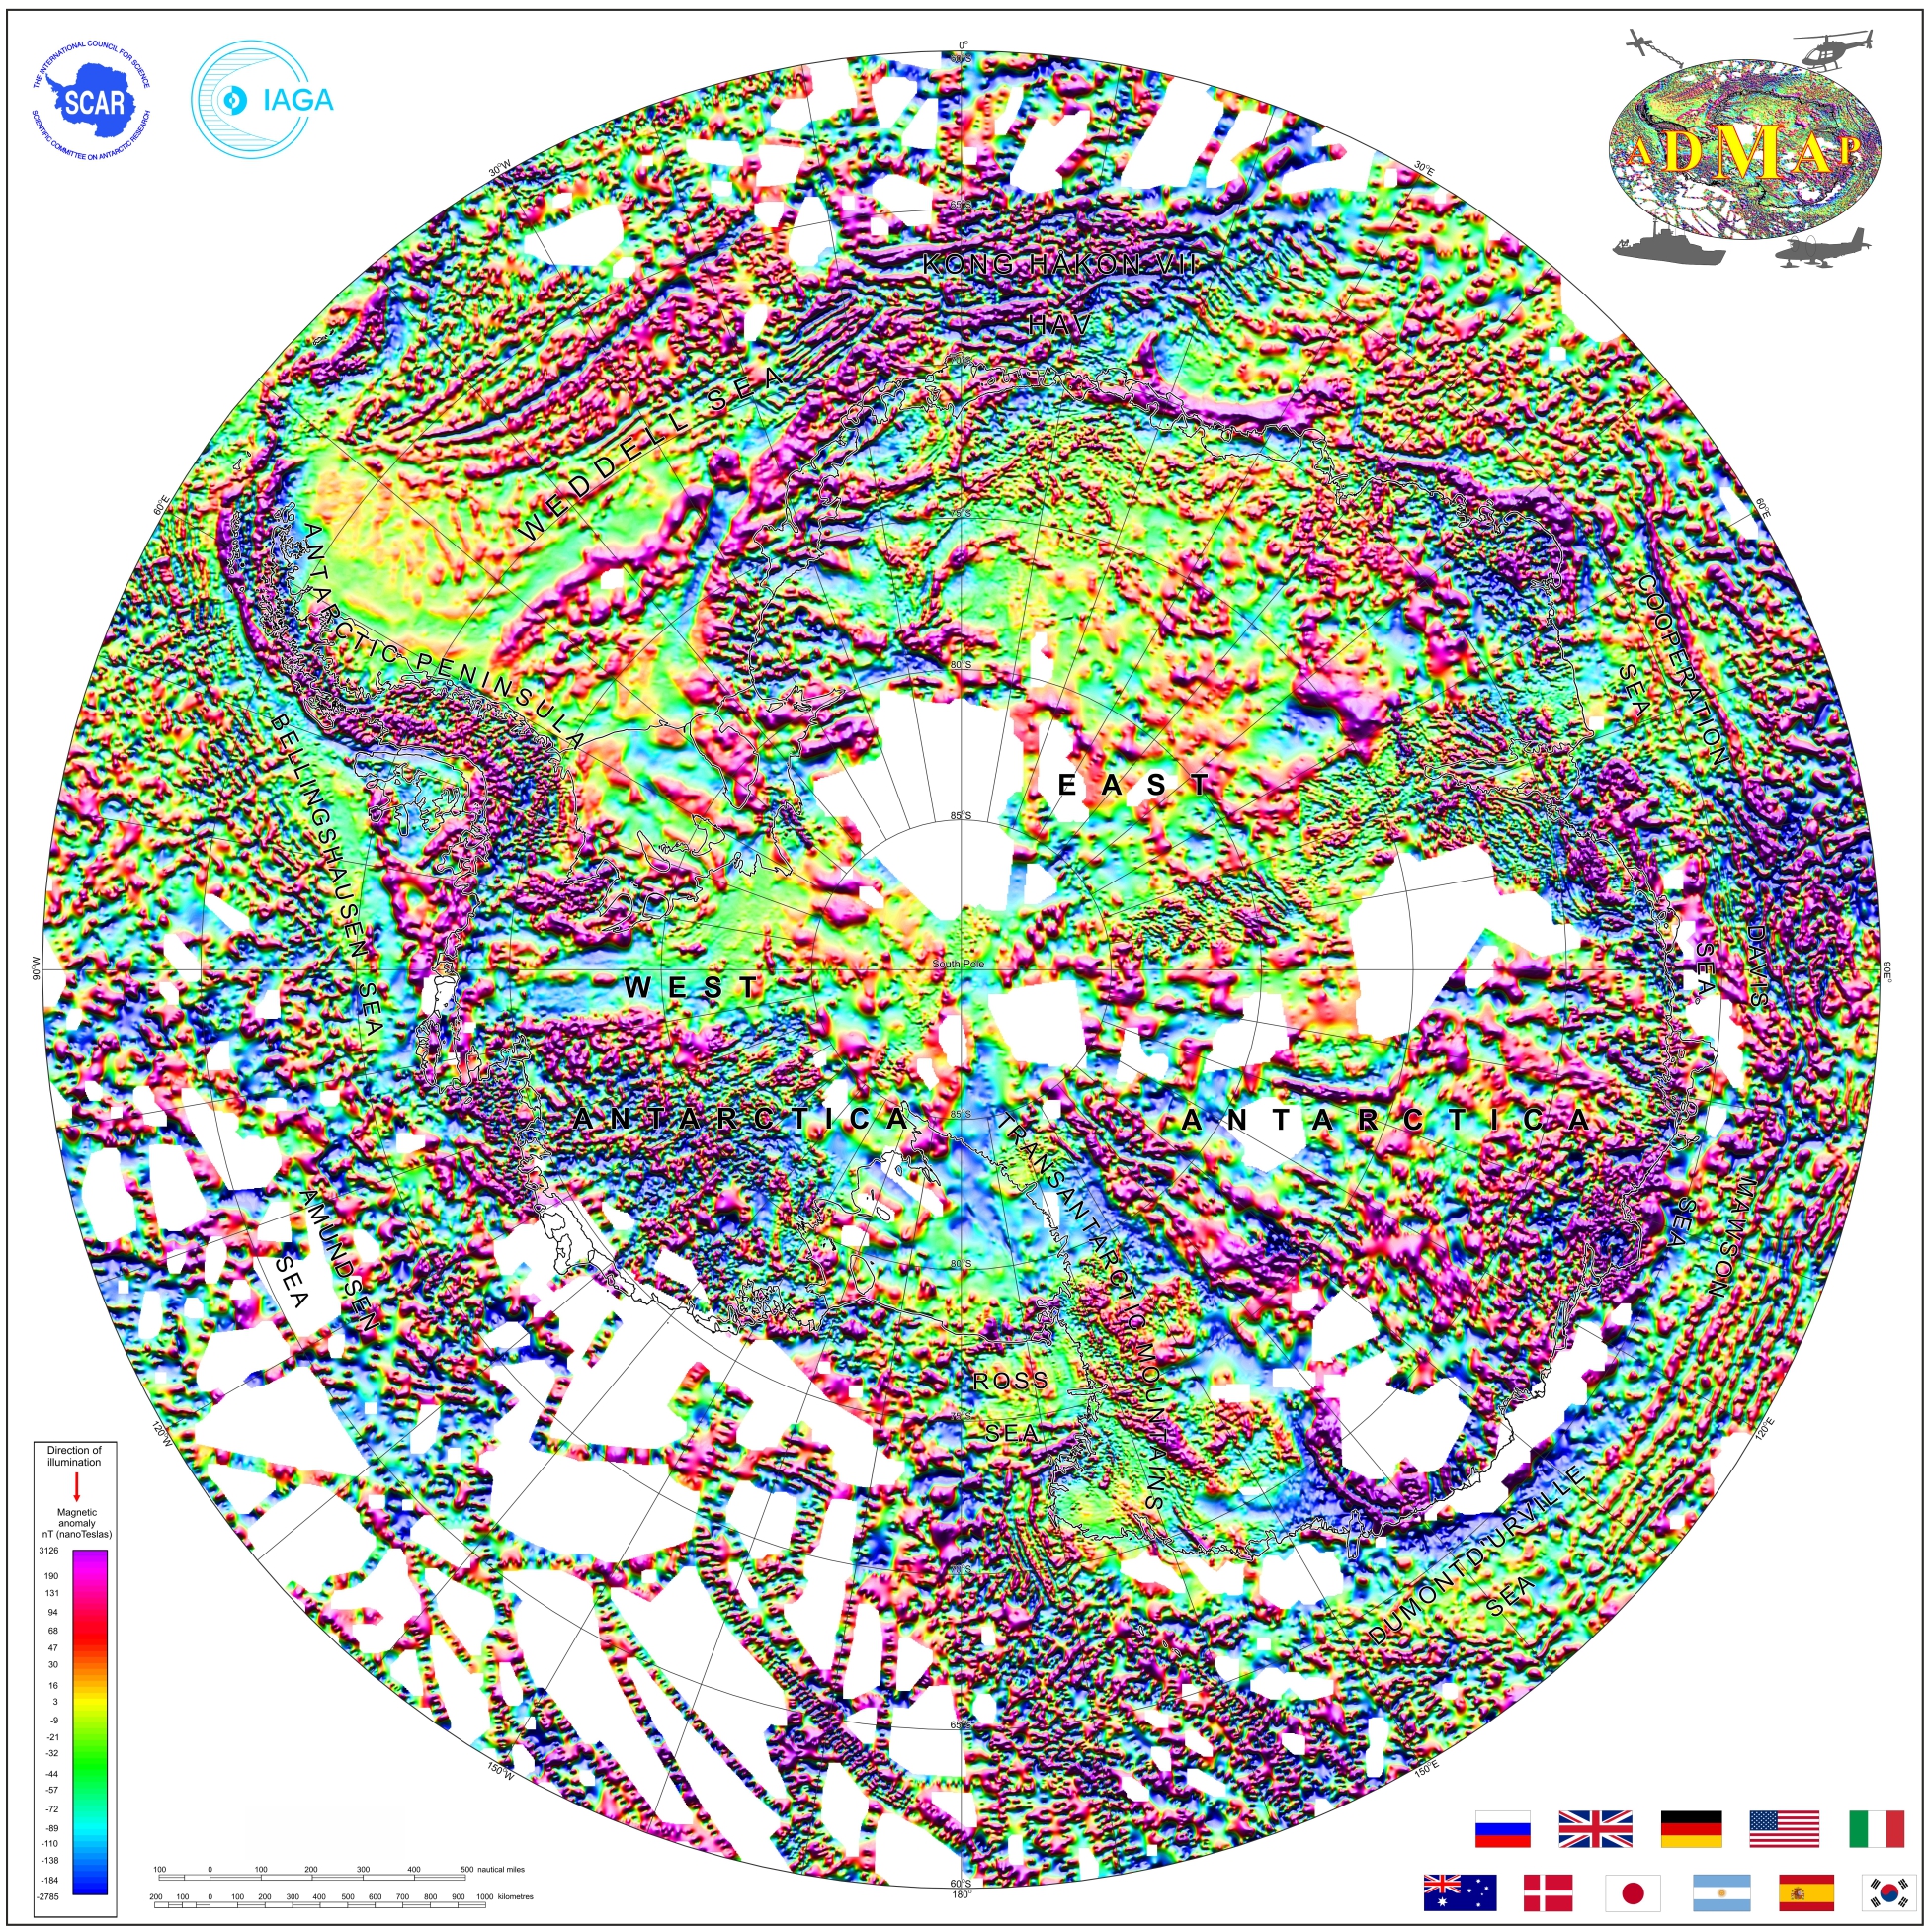 New magnetic anomaly map unveil Antarctica - British Antarctic Survey